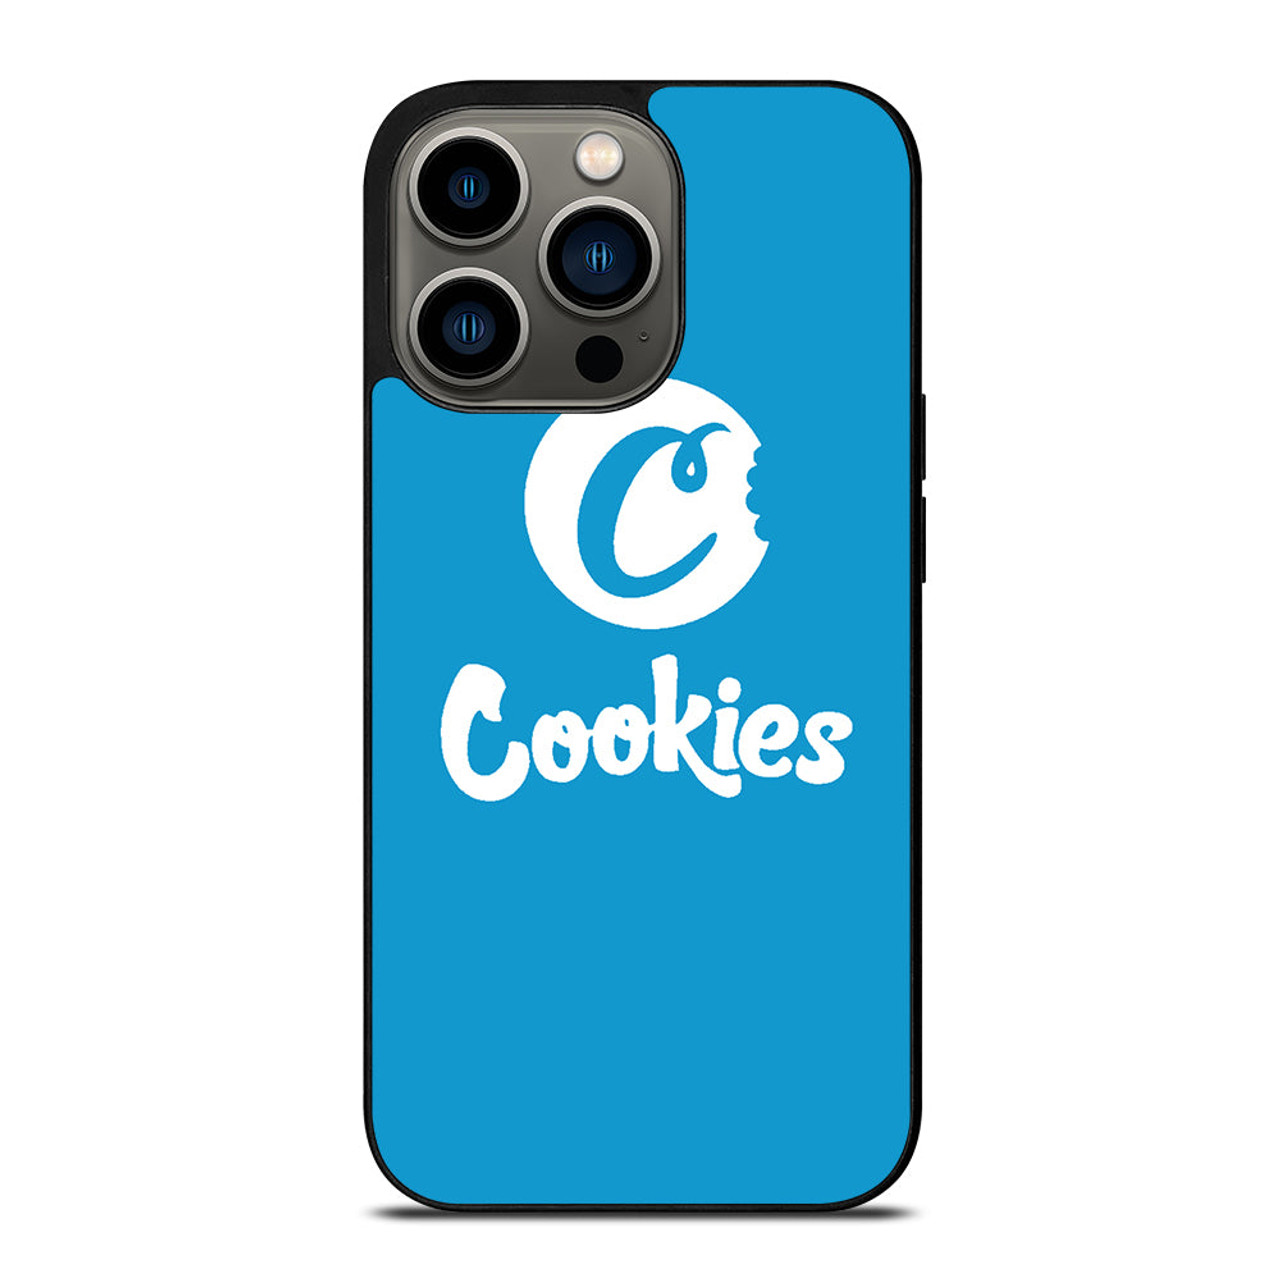 IPHONE CASES – Cookiecase™